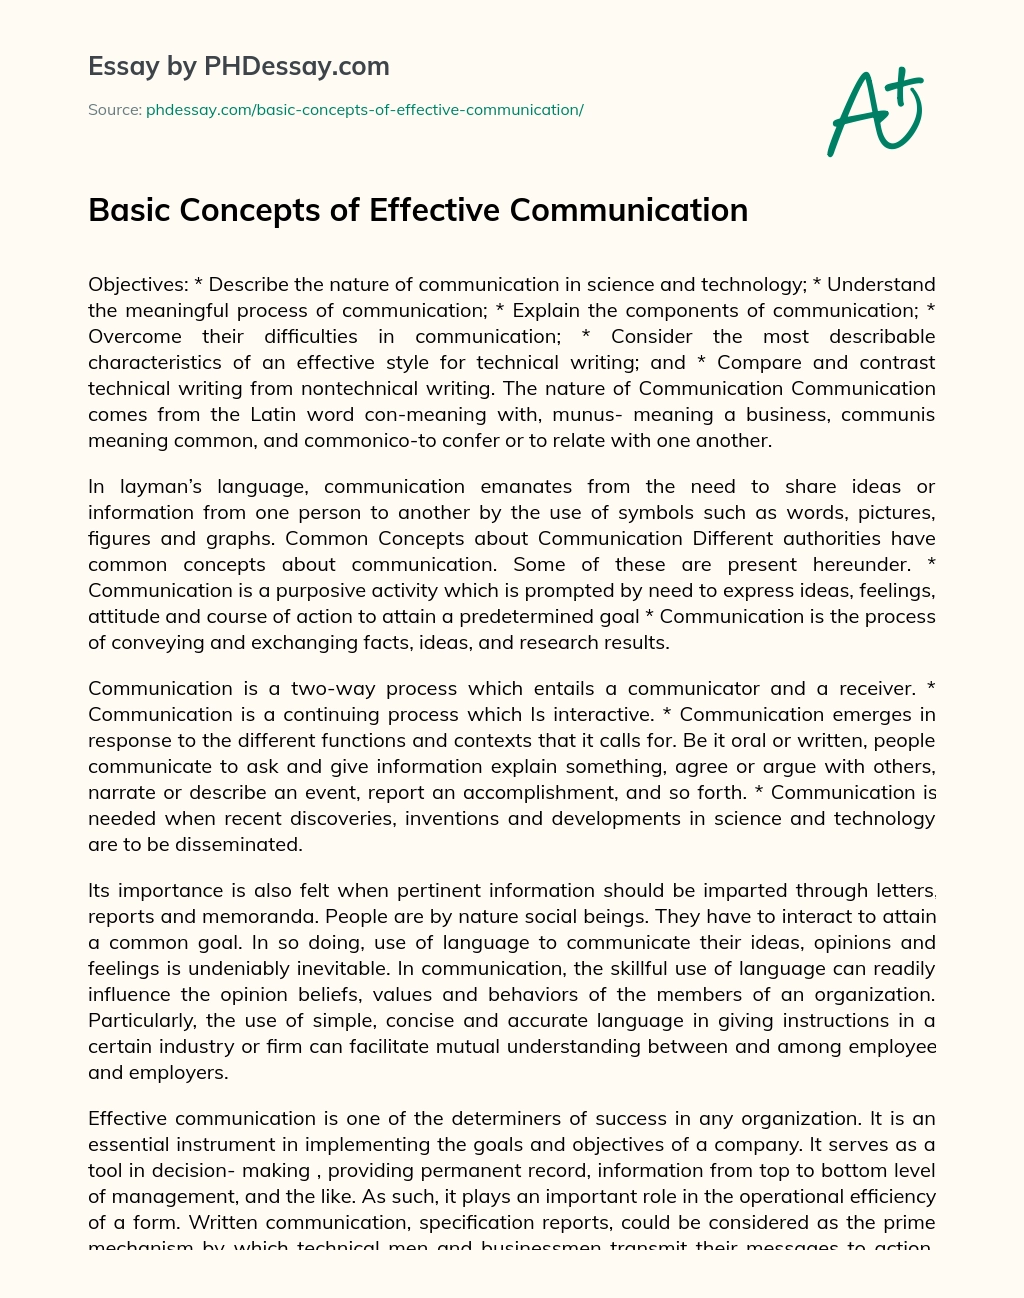 Реферат: Effective Communication Essay Research Paper Effective CommunicationAs